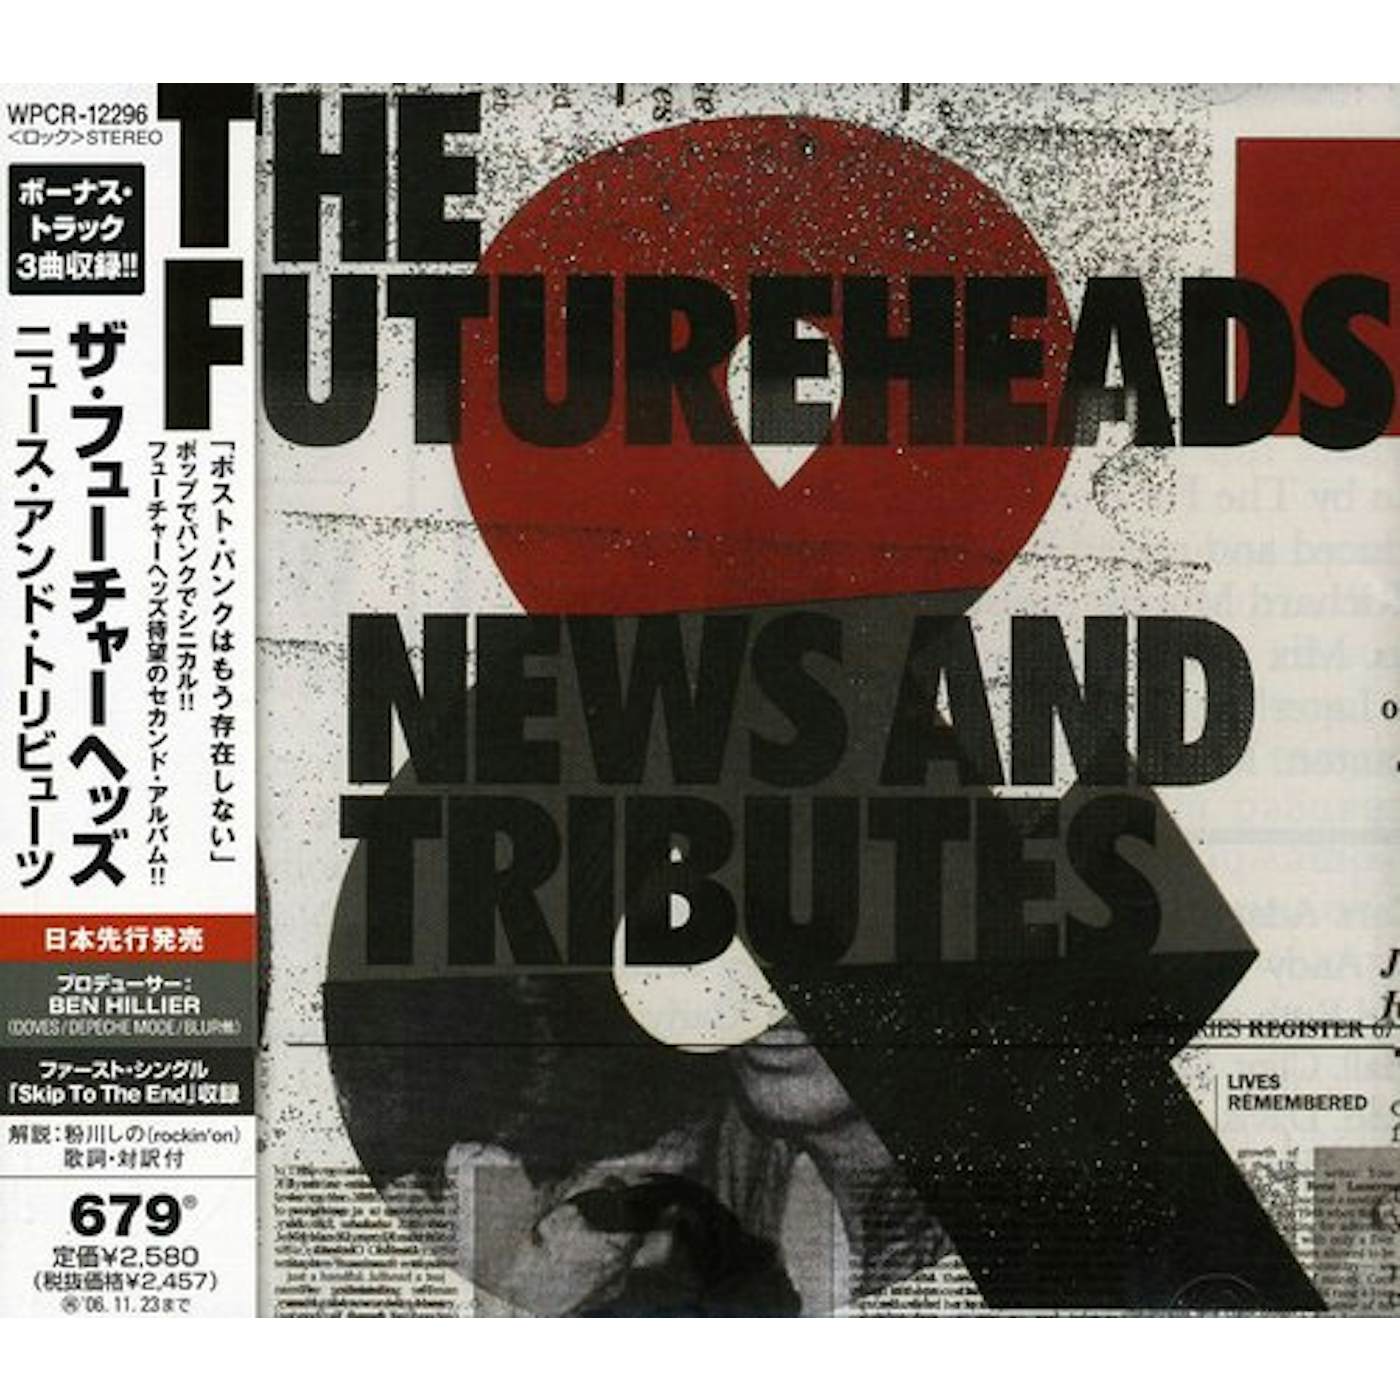 The Futureheads NEWS & TRIBUTES CD